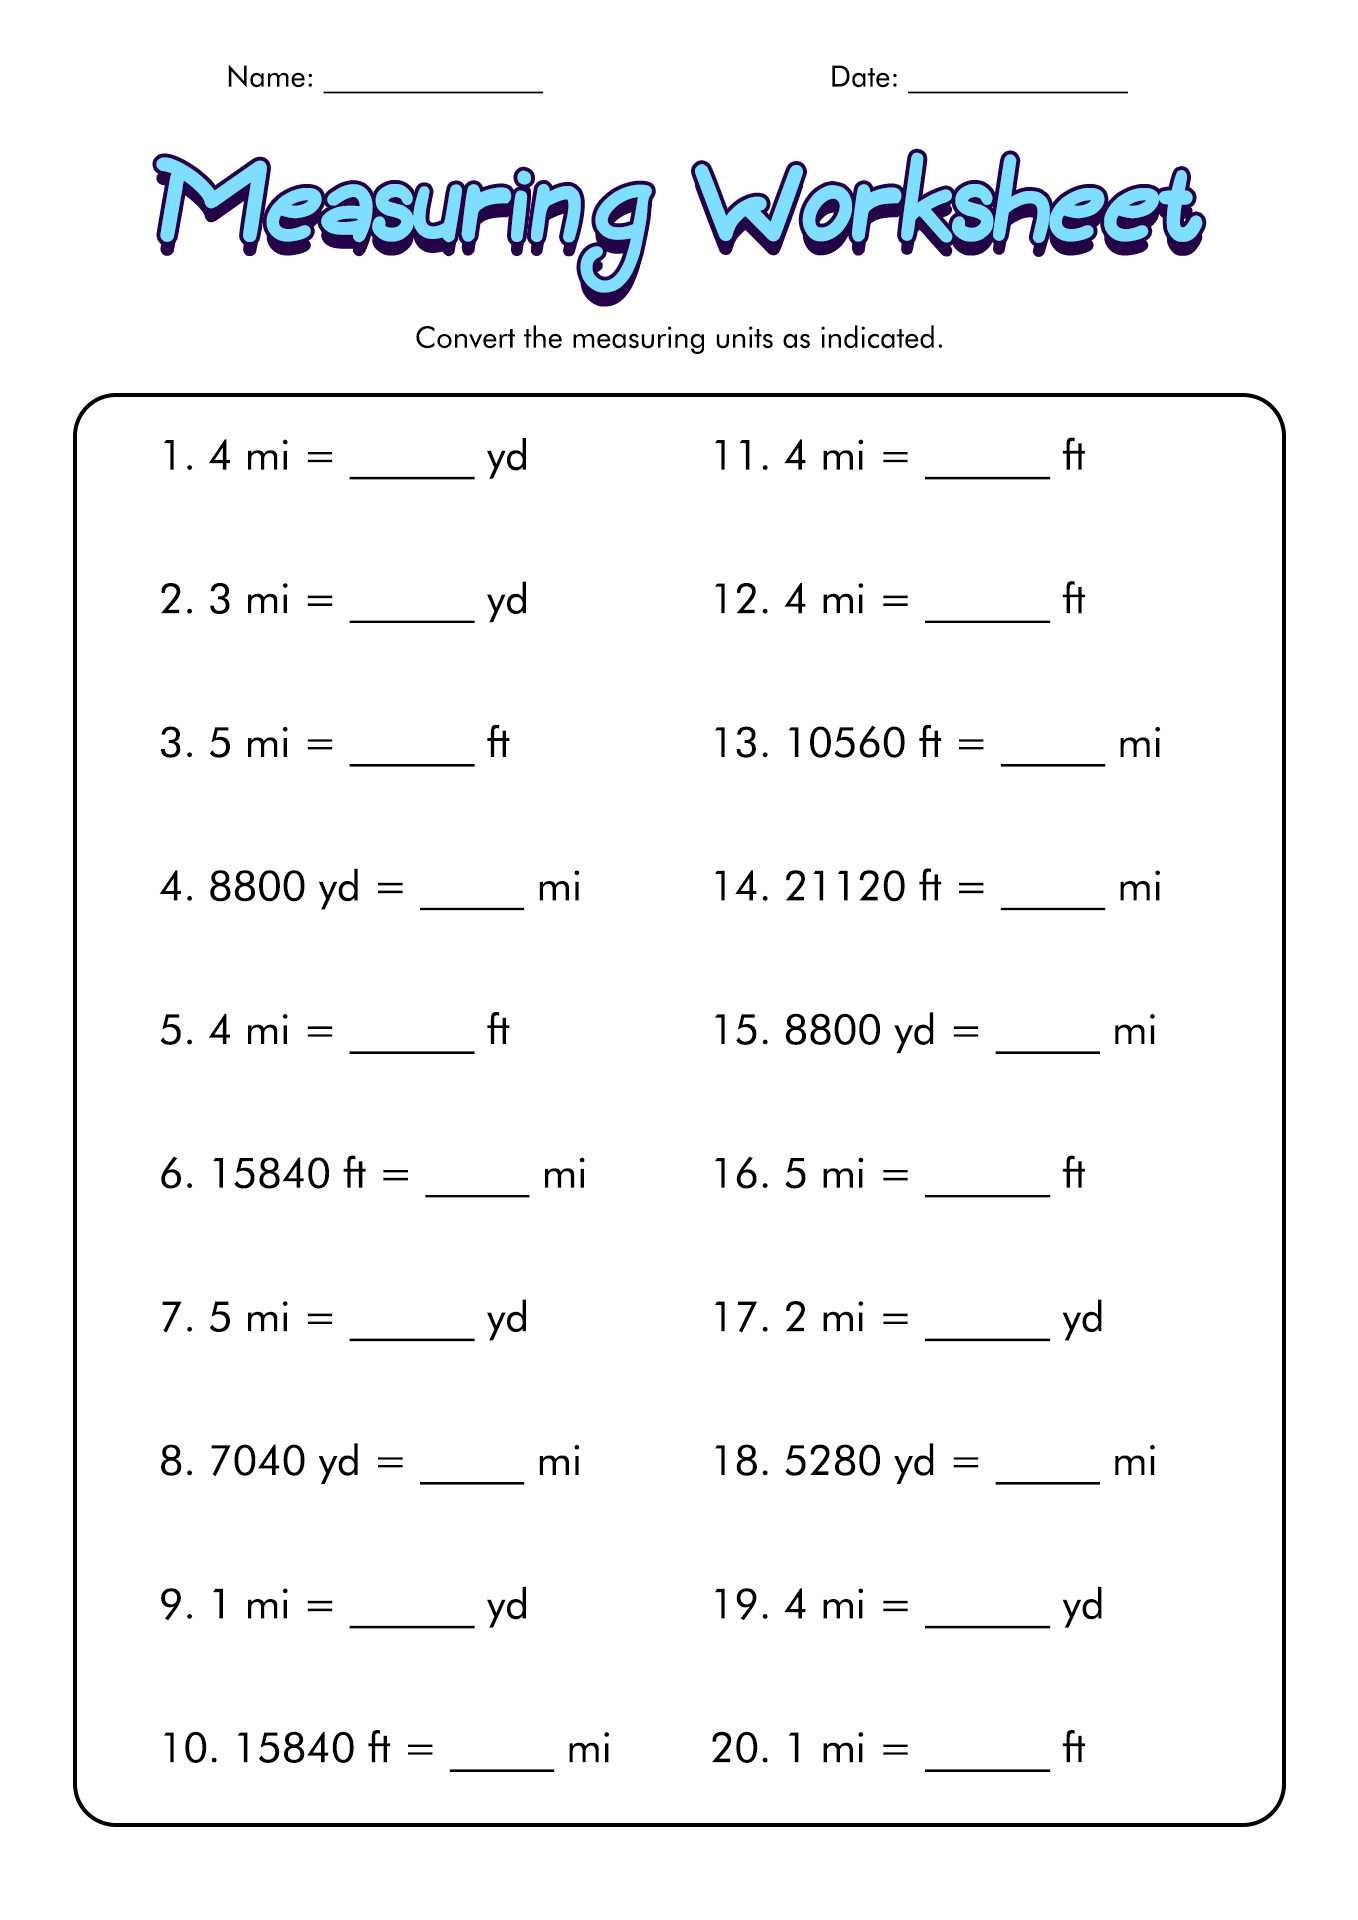 Measurement Conversion Worksheets 4th Grade Image